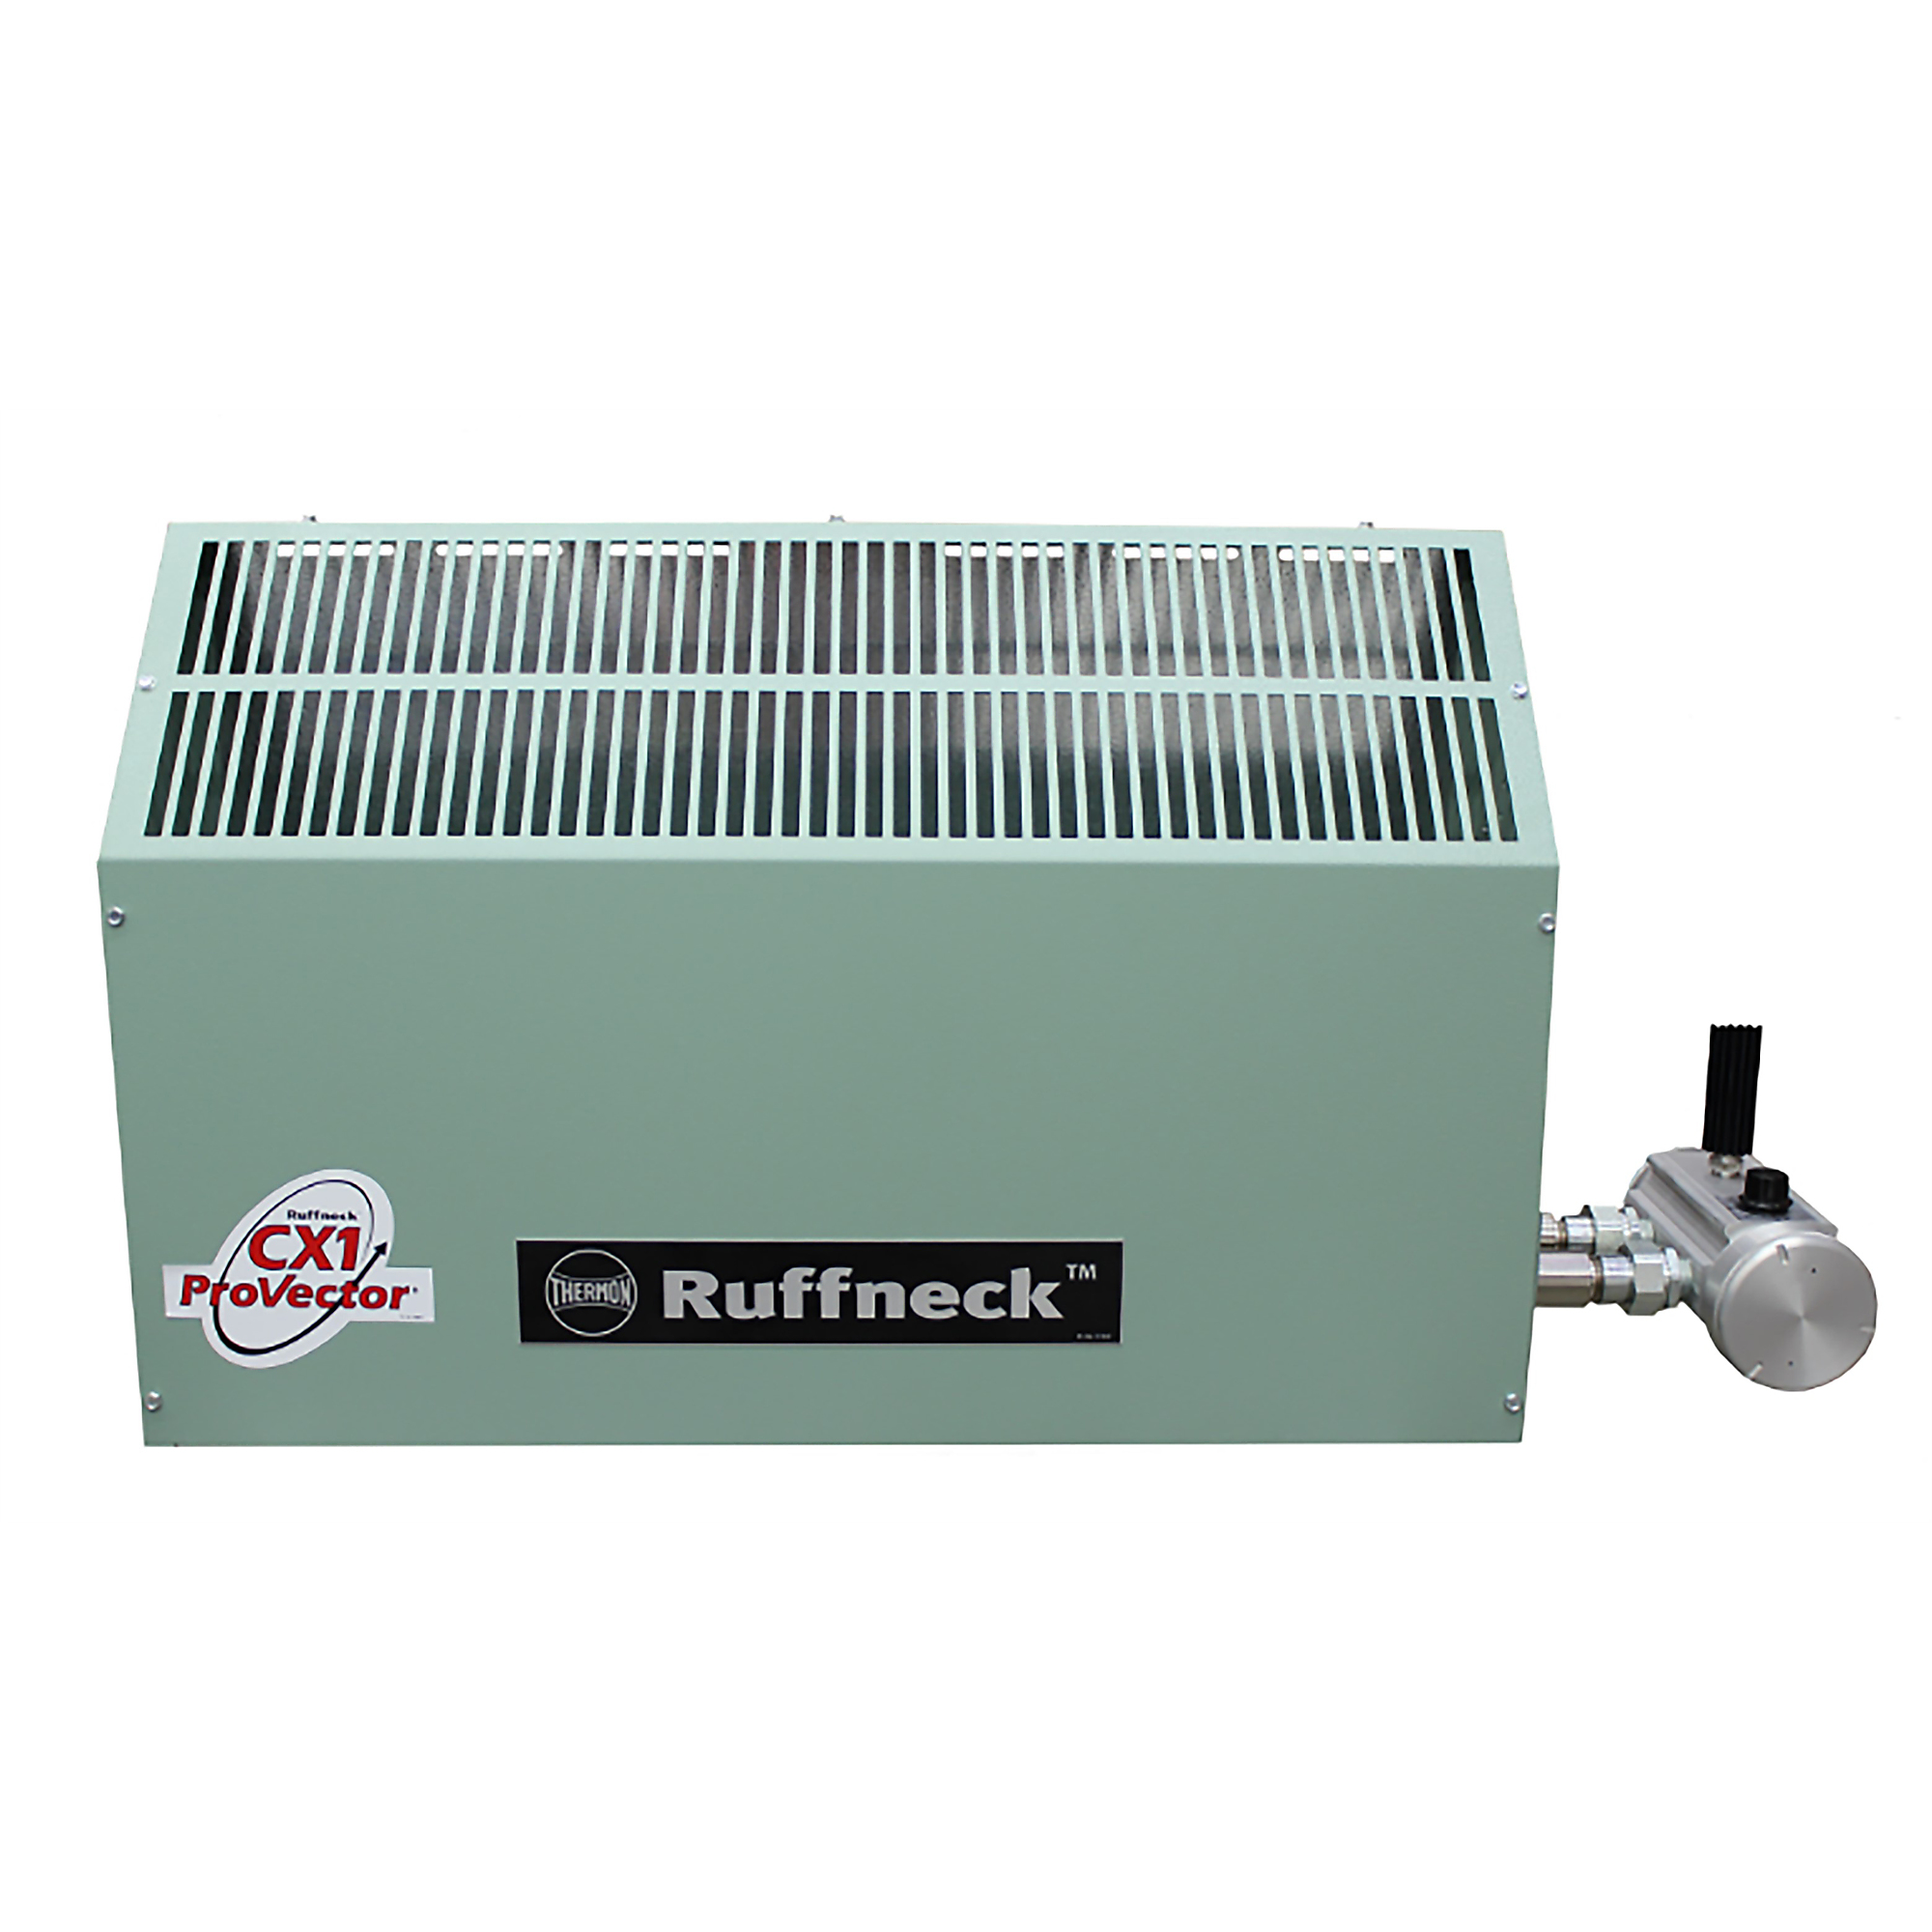 Ruffneck, CX1 ProVectorEP Convection Heater 3600W, Heat Type Convection, Heat Output 12283 Btu/hour, Model CX1240160036T2AIIBT